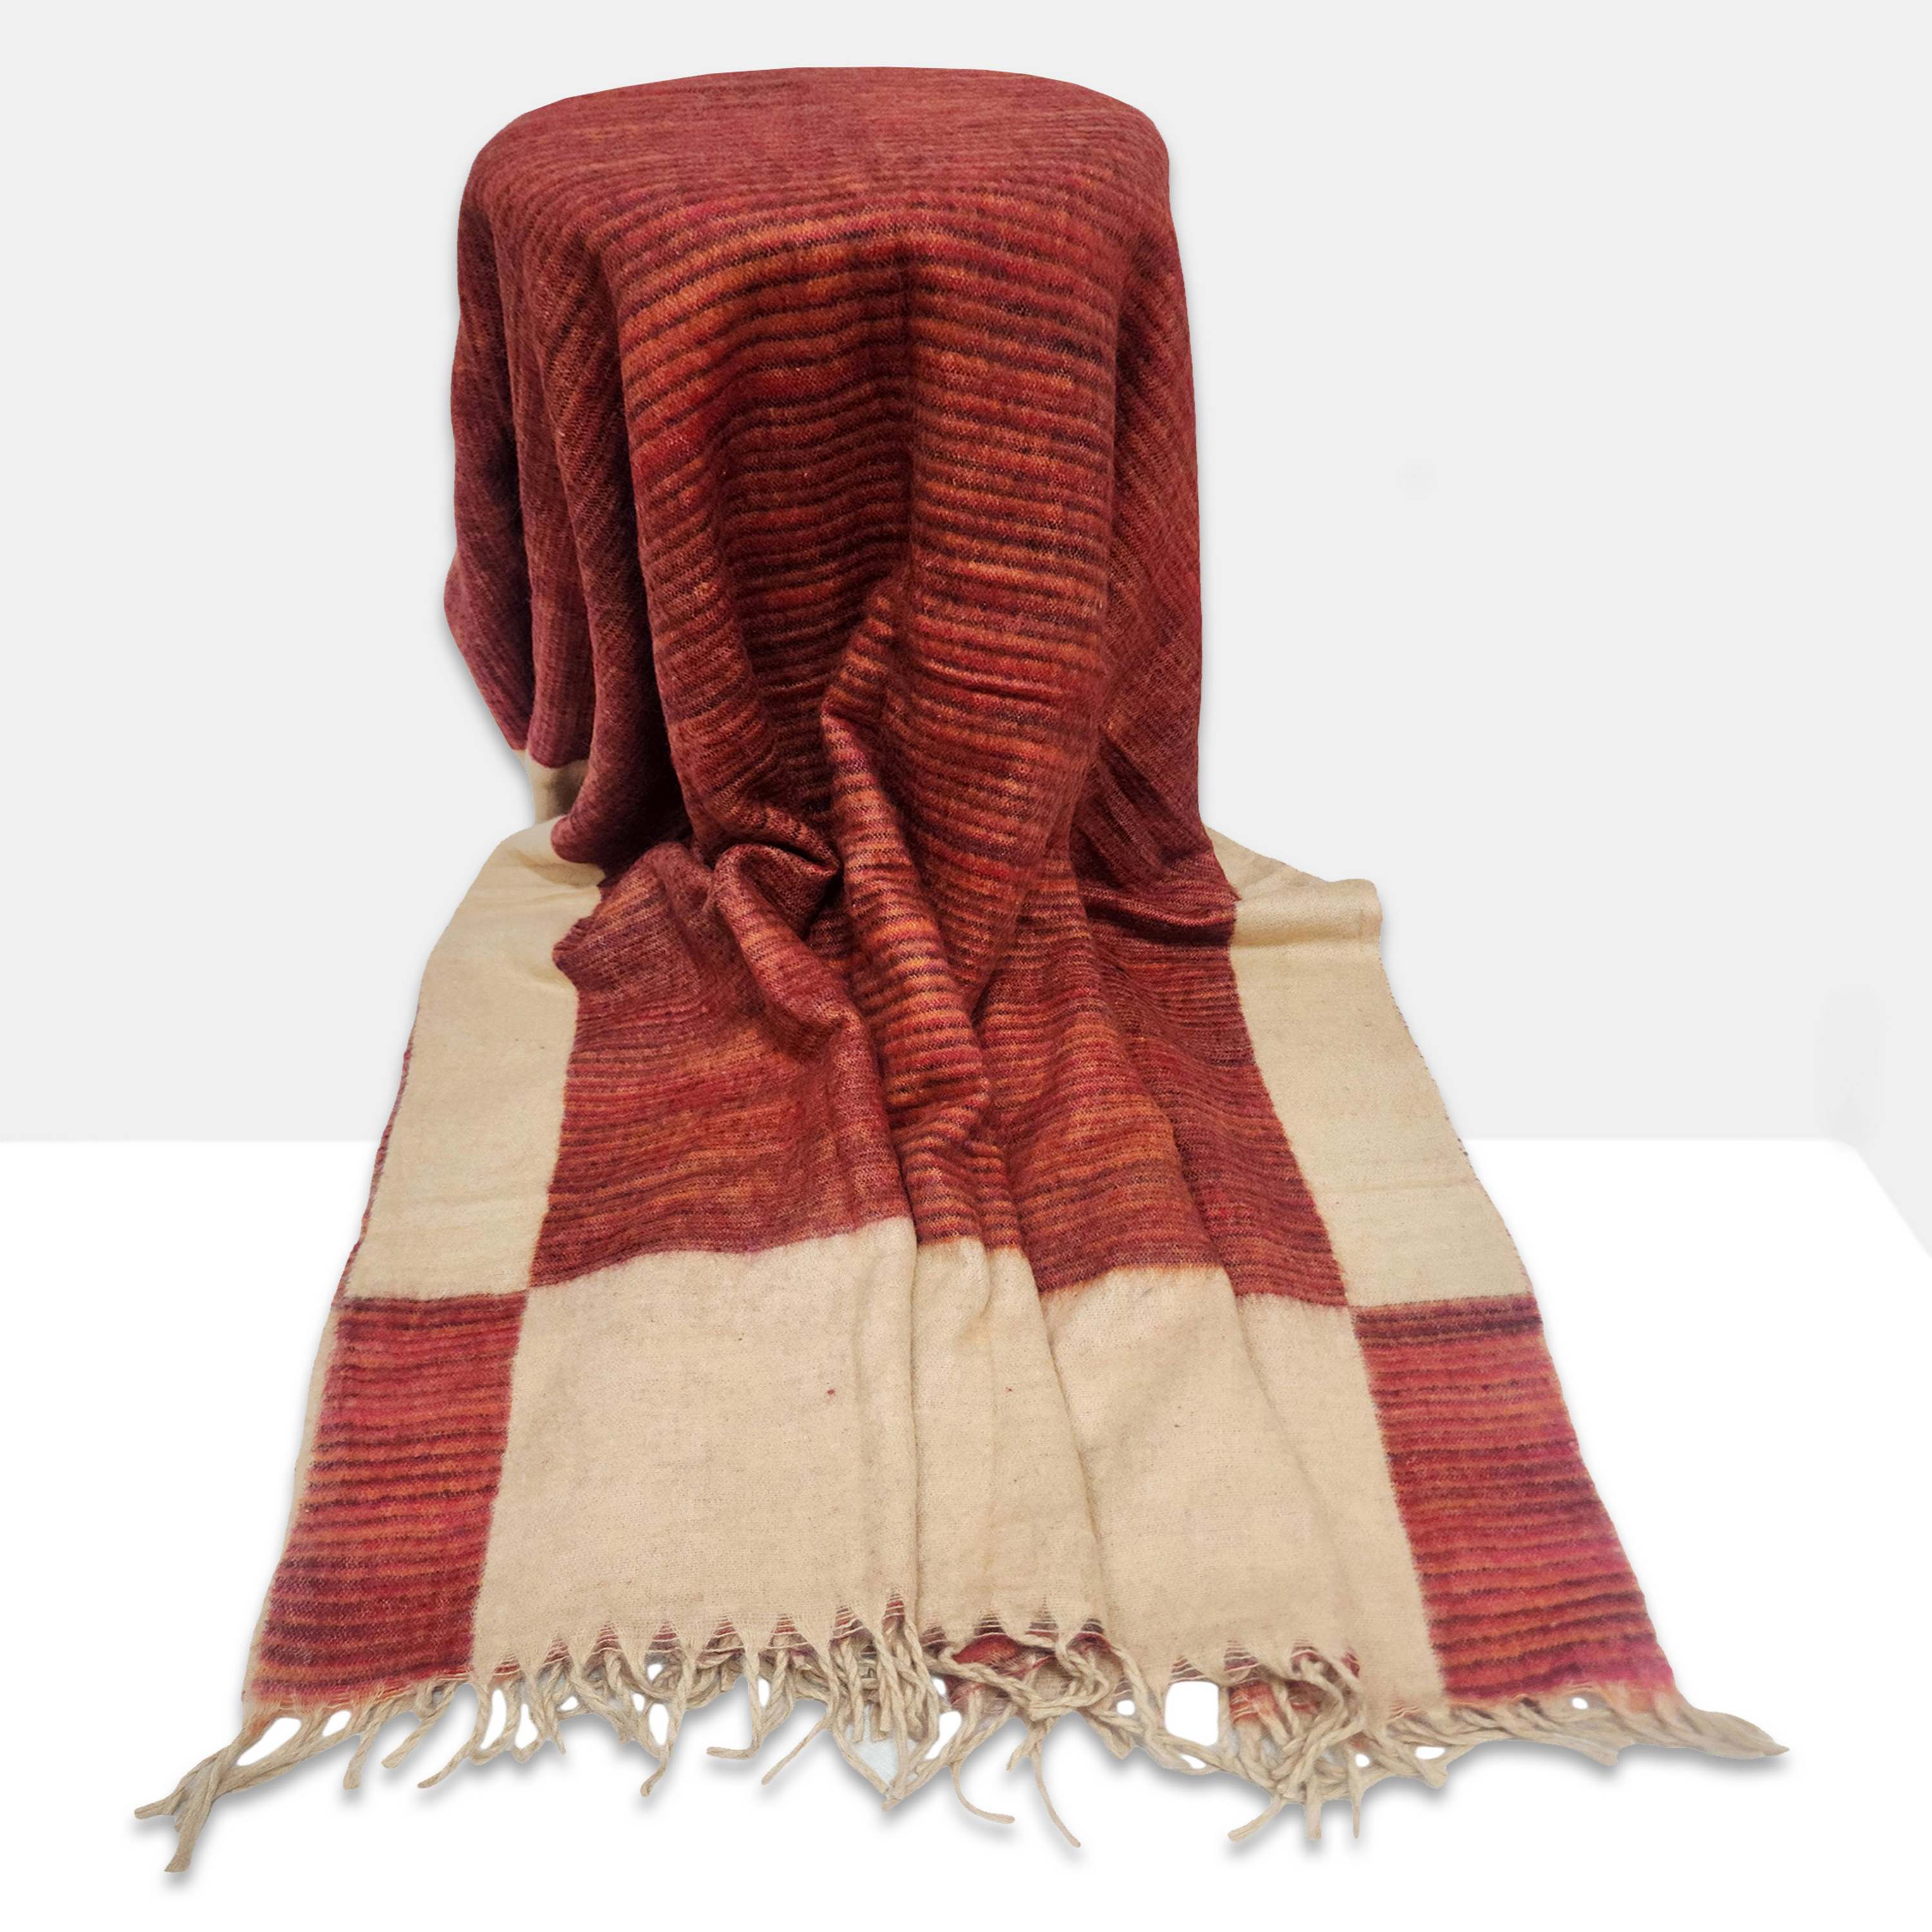 Tibet Blanket, Acrylic Woolen Blanket, With Multi Color Strip